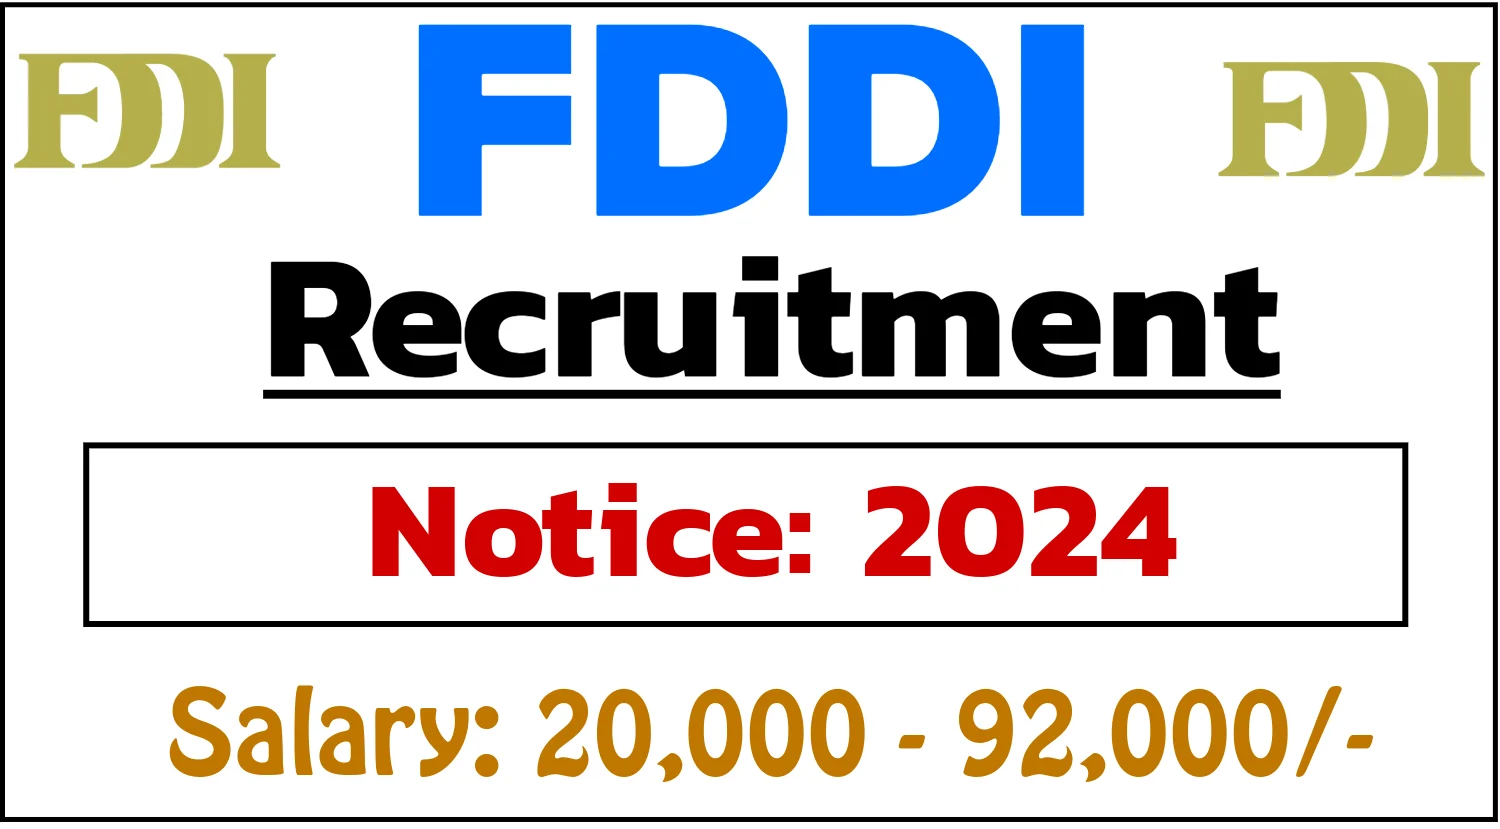 FDDI Recruitment 2024